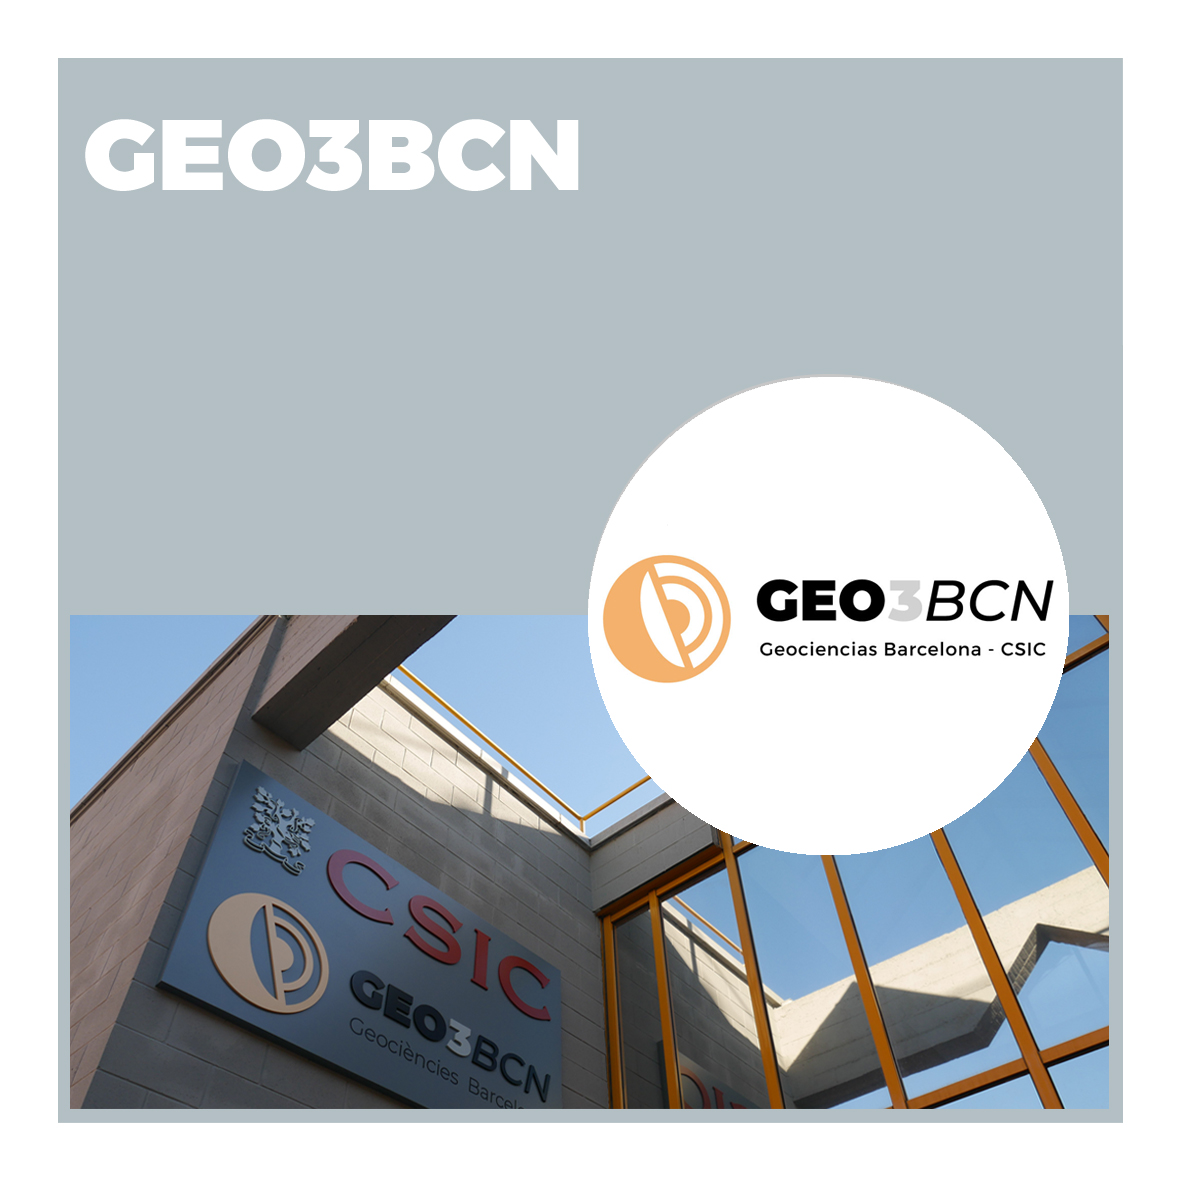 Geociencias Barcelona (GEO3BCN)